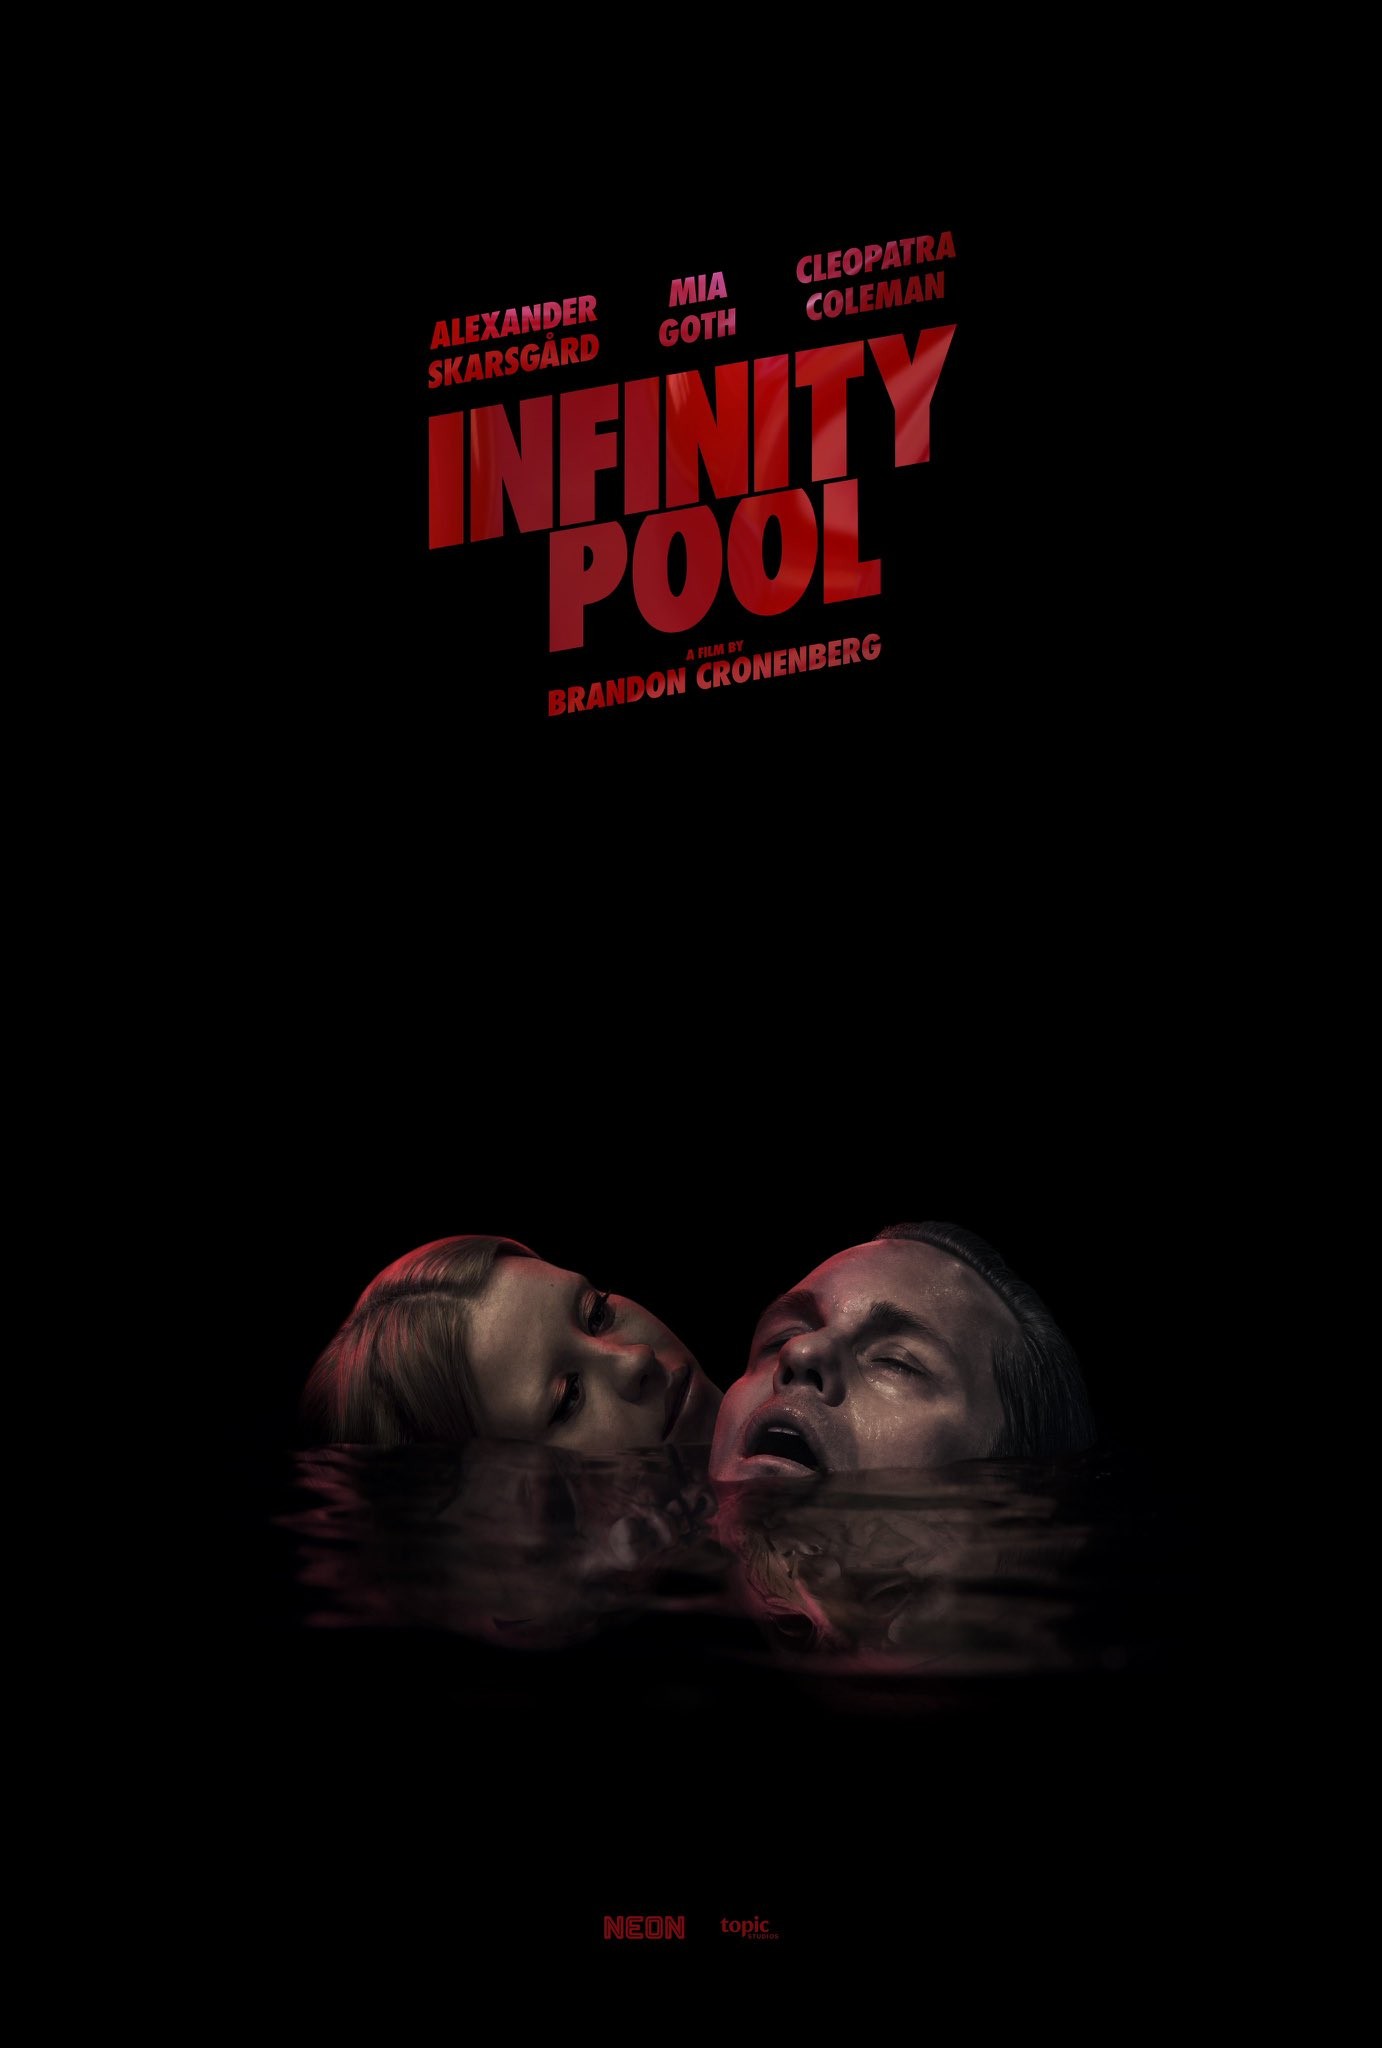 Plakat do filmu Infinity Pool od Neon.jpg